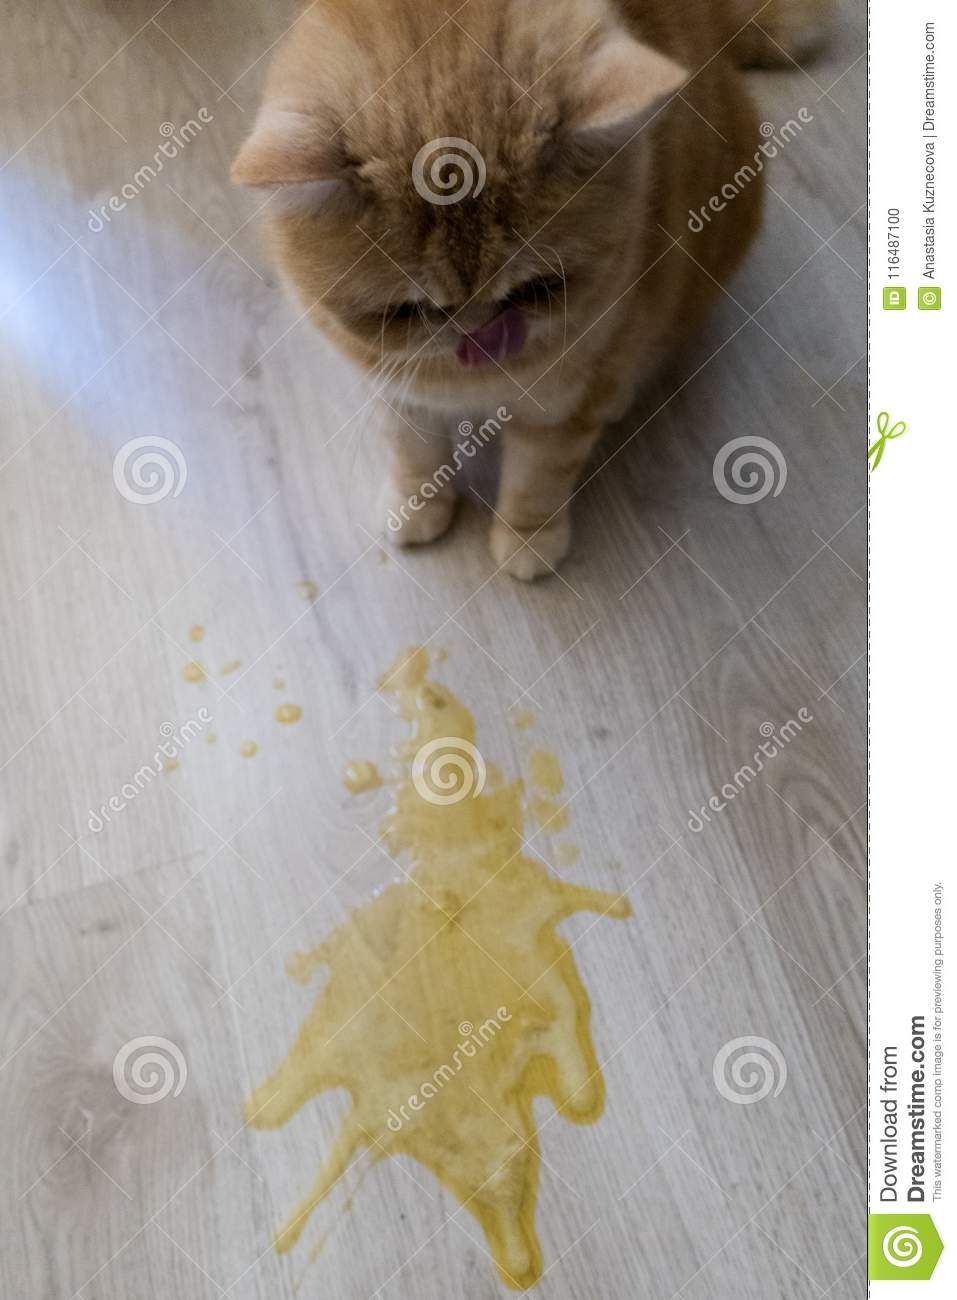 Кошку тошнит жидкостью. Кот рыгнул желтой жидкостью. Тошнит желтой жидкостью. Кота стошнило желтой жидкостью.